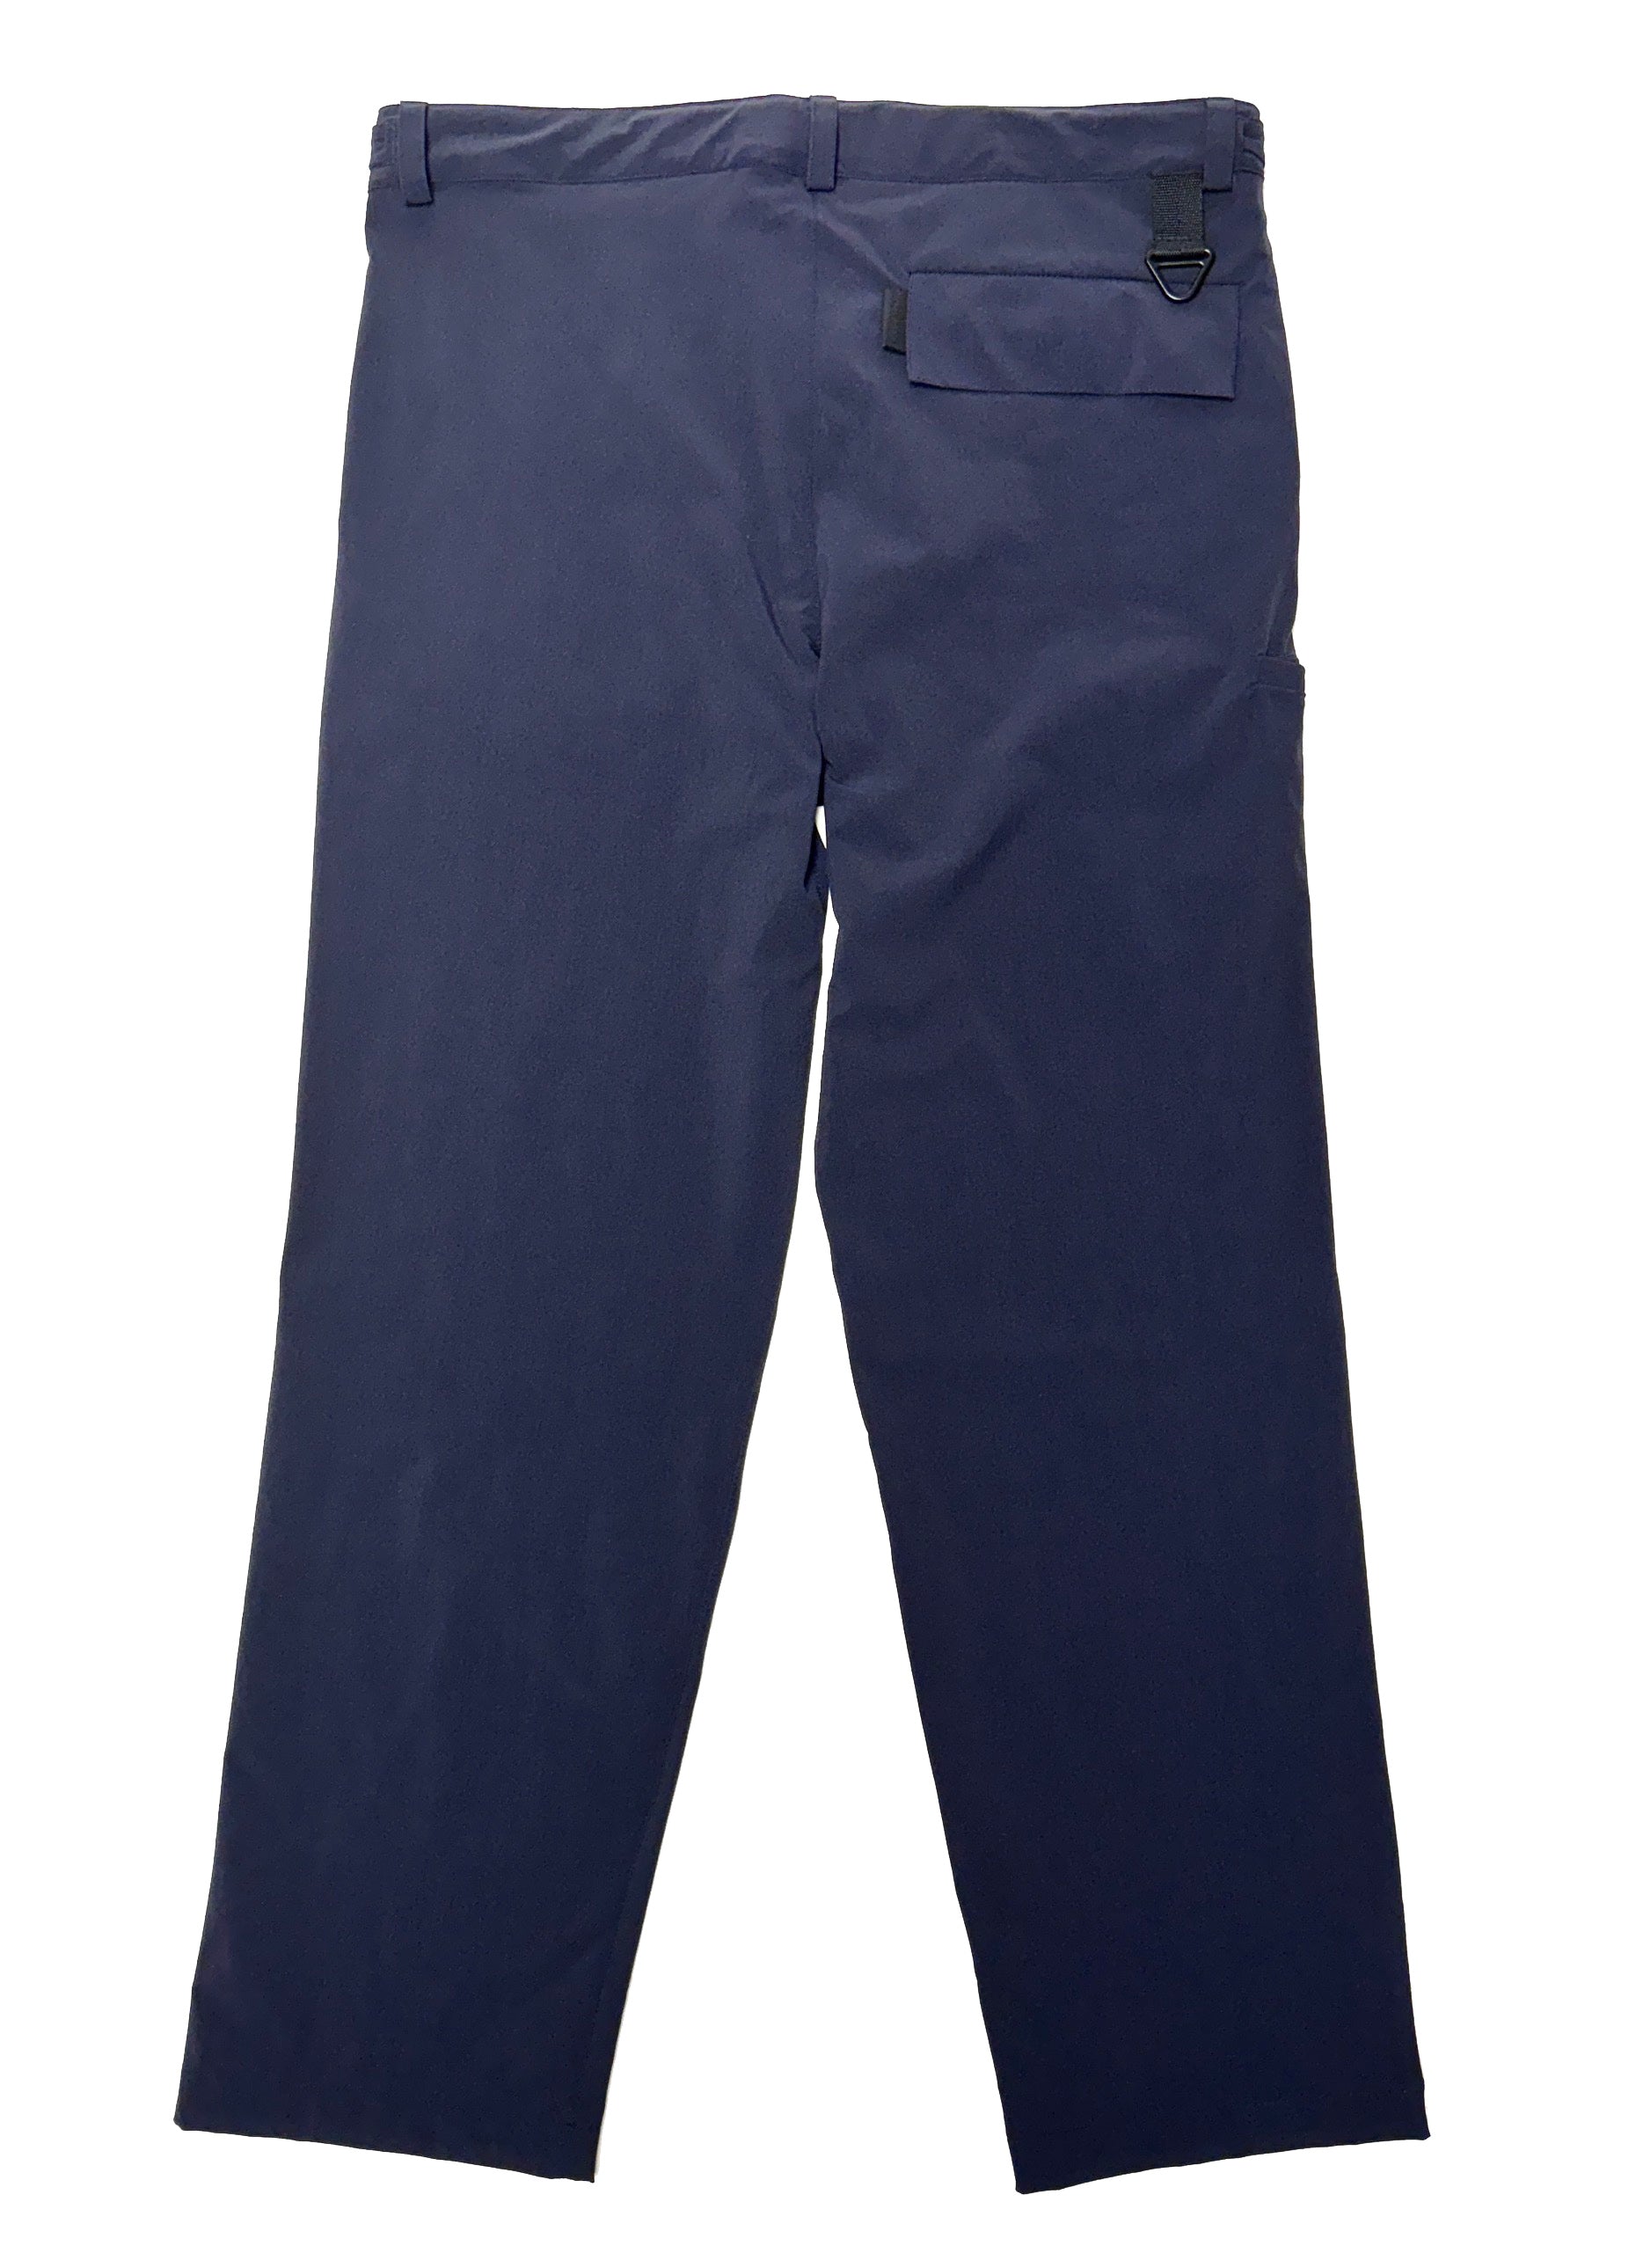 Friedland Trousers | Navy